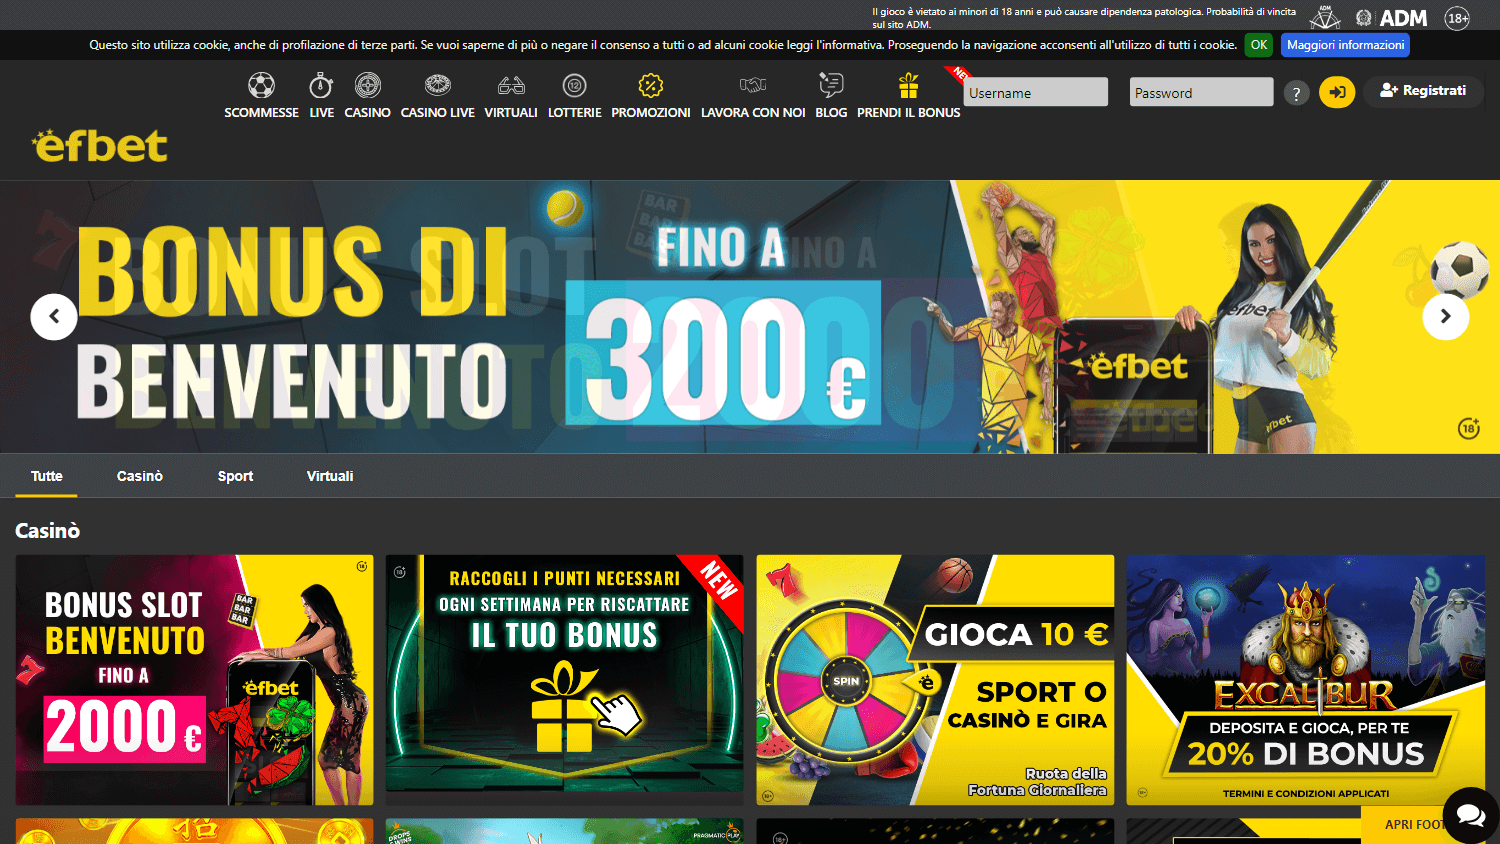 efbet_casino_it_promotions_desktop